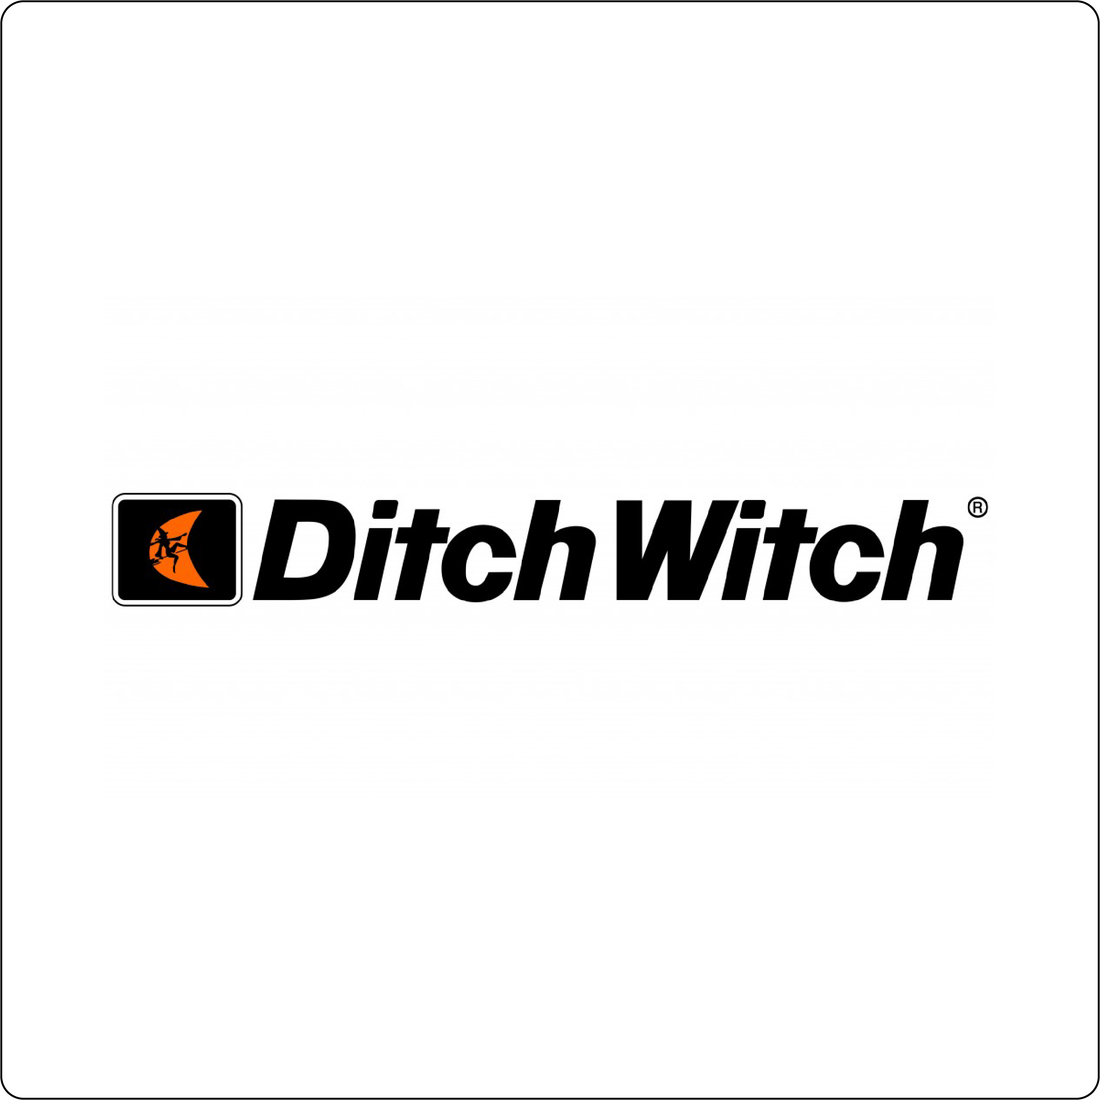  Ditch Witch®